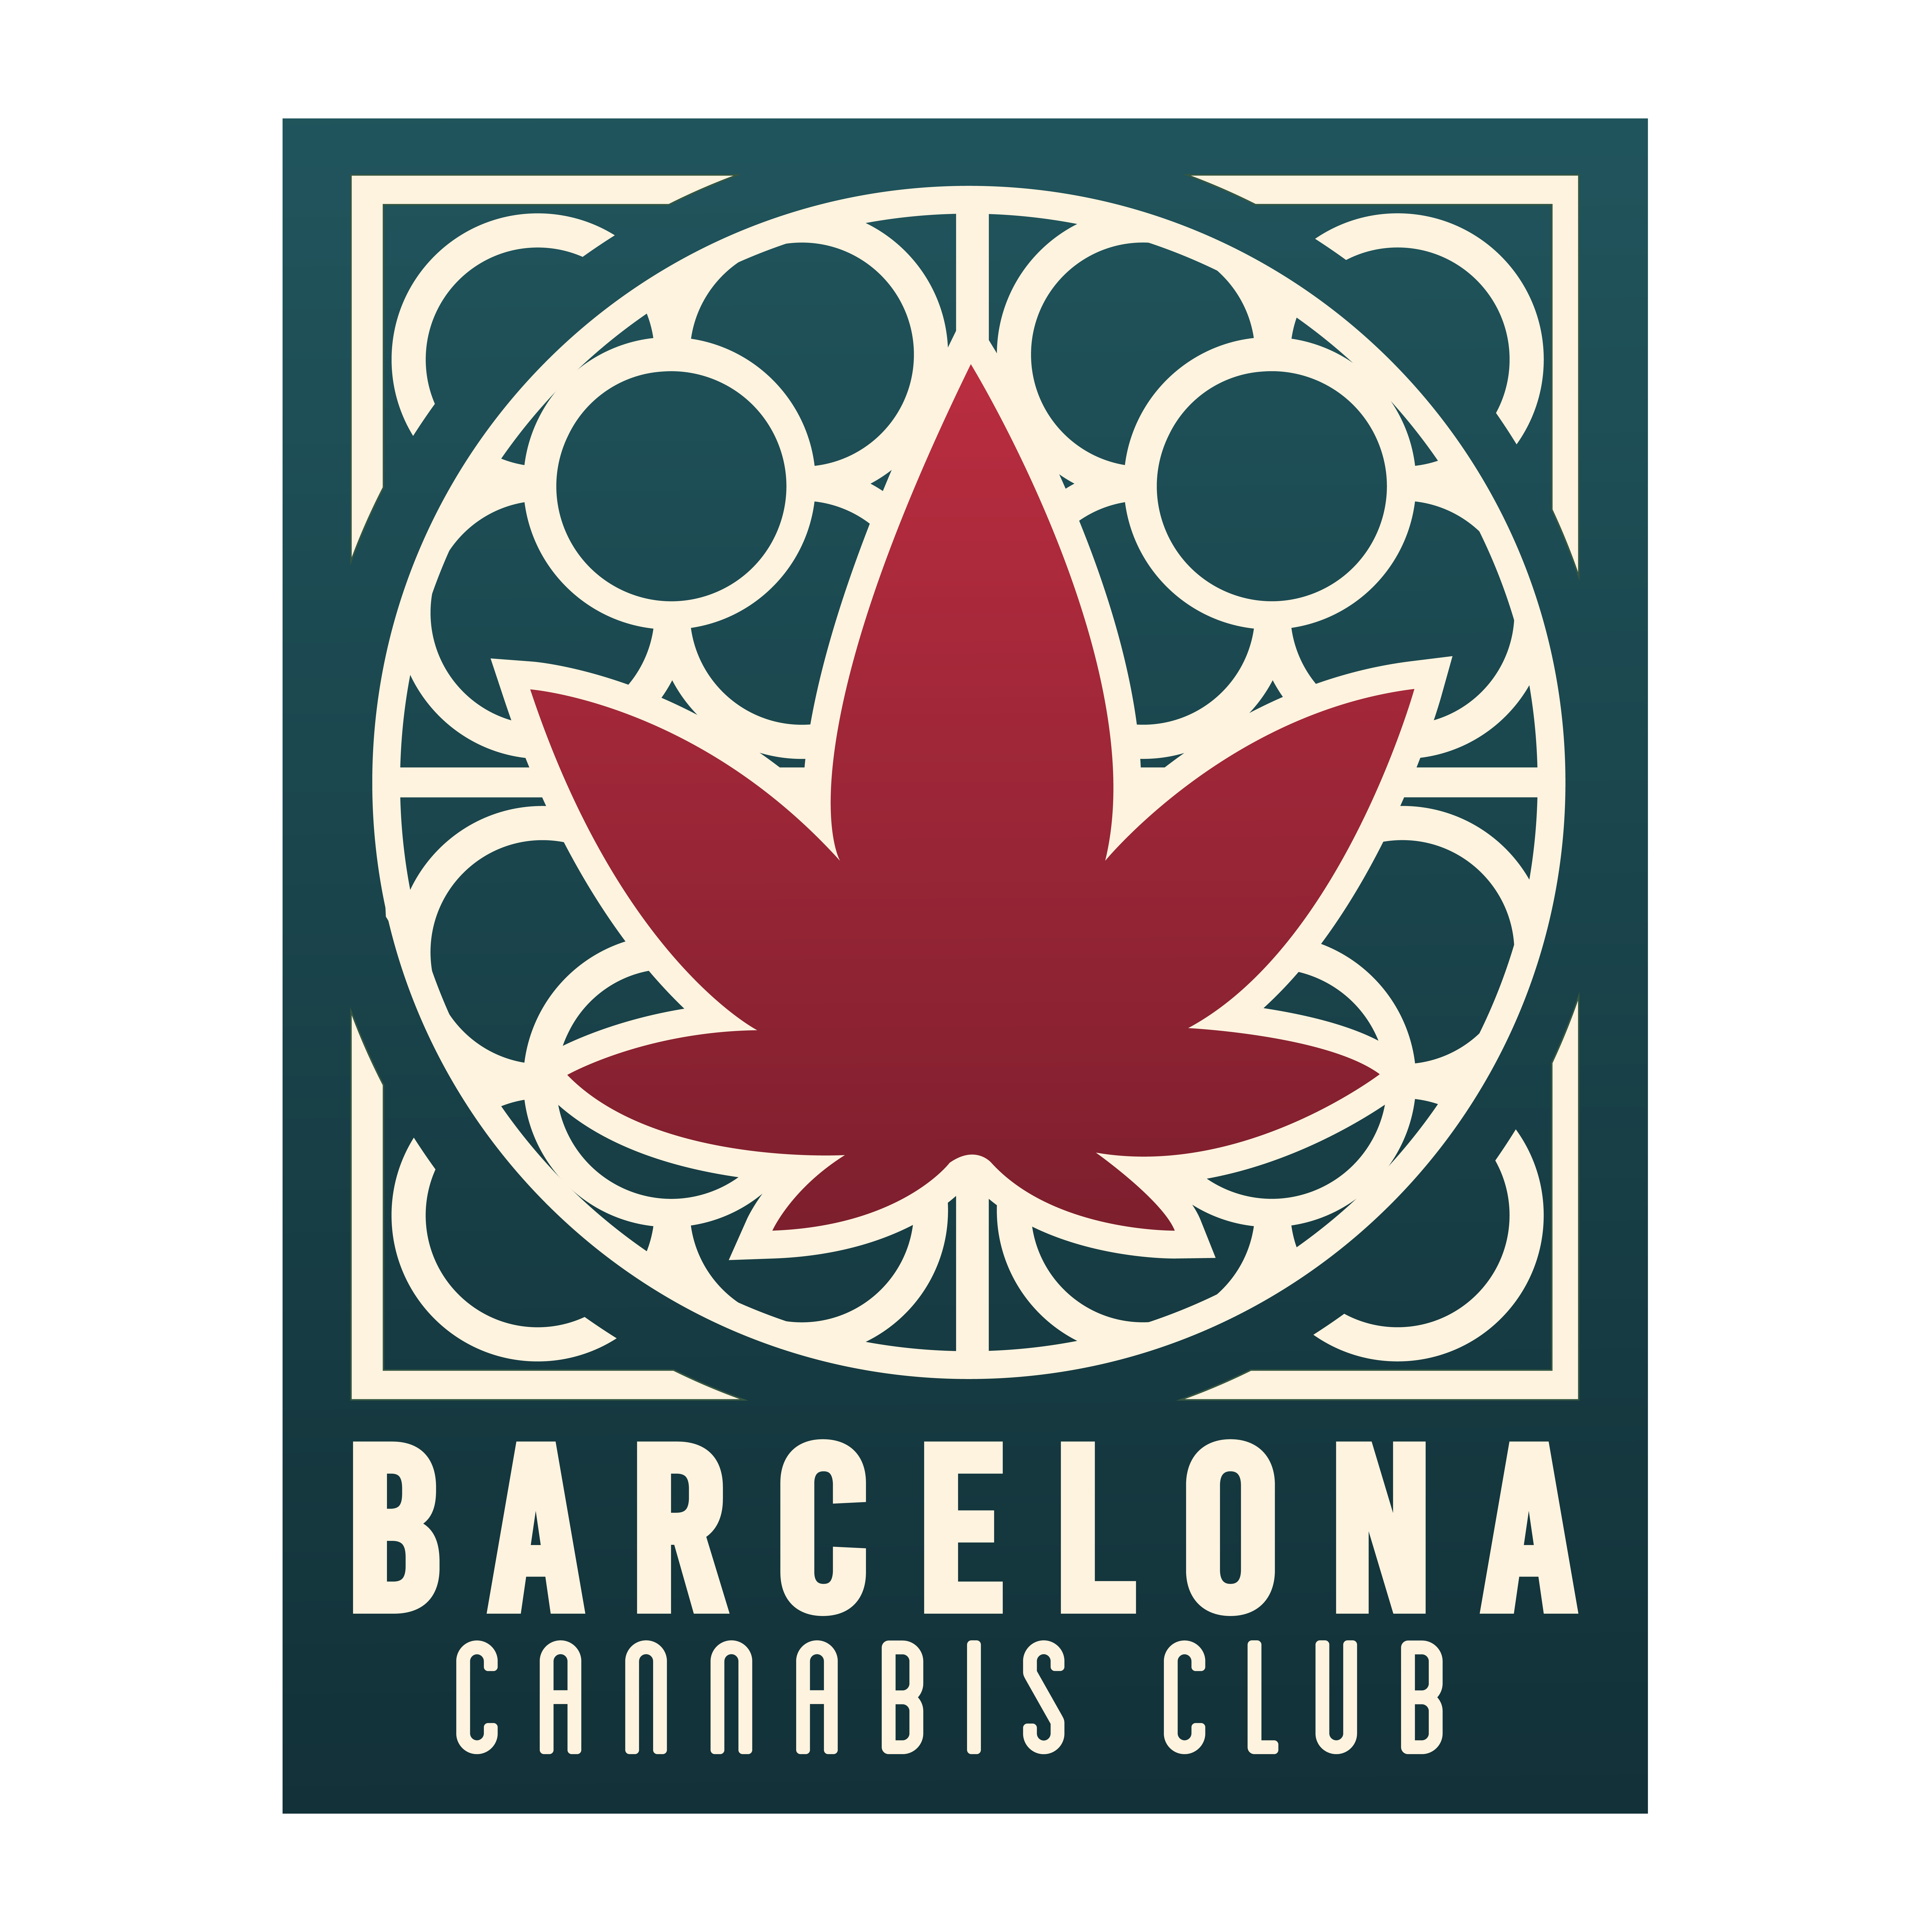 Barcelona Cannabis Club